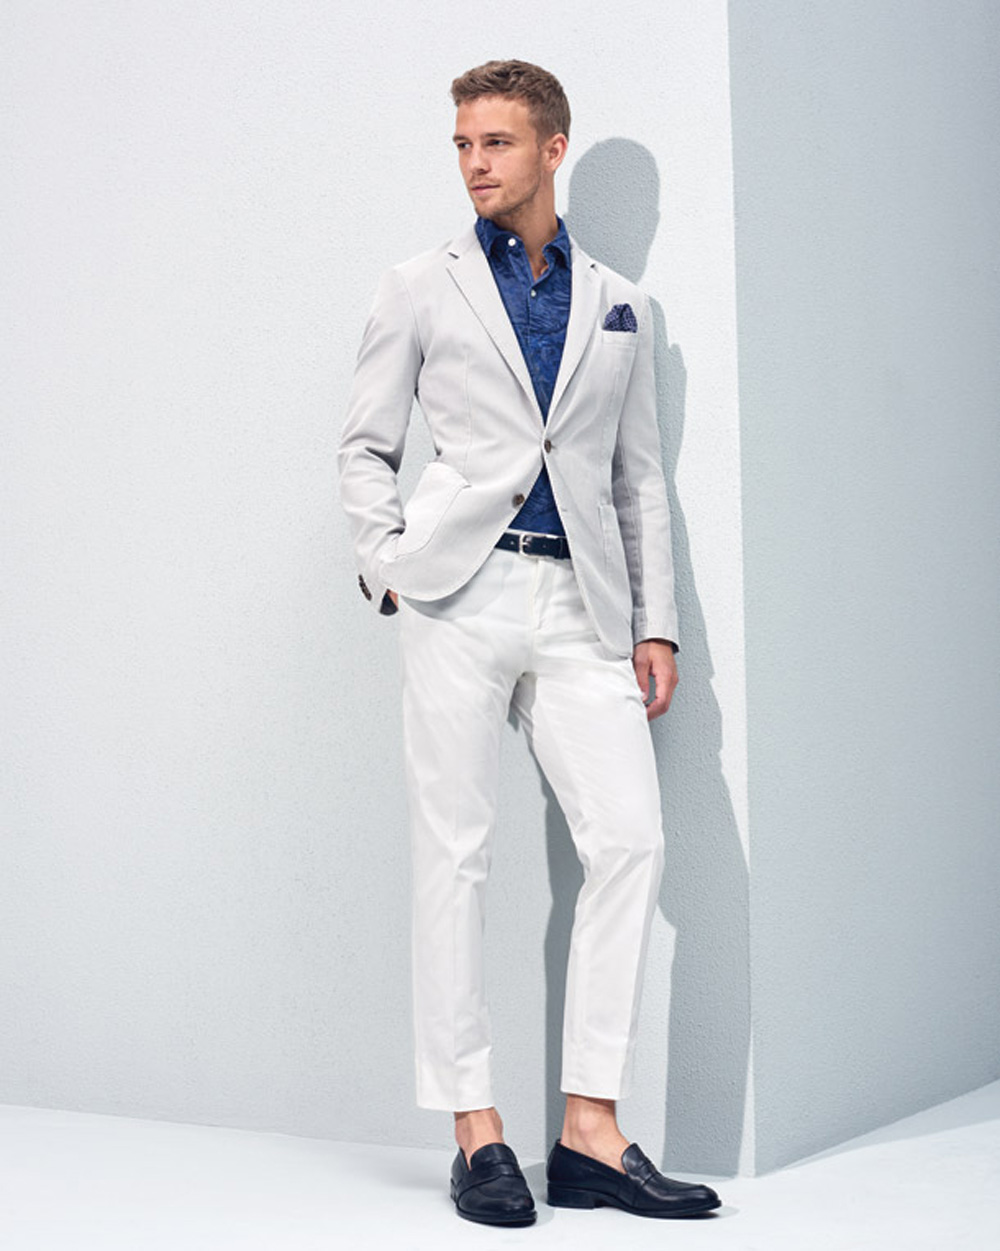 Tommy Hilfiger Spring/Summer 2016 Lookbook - Fashionably Male